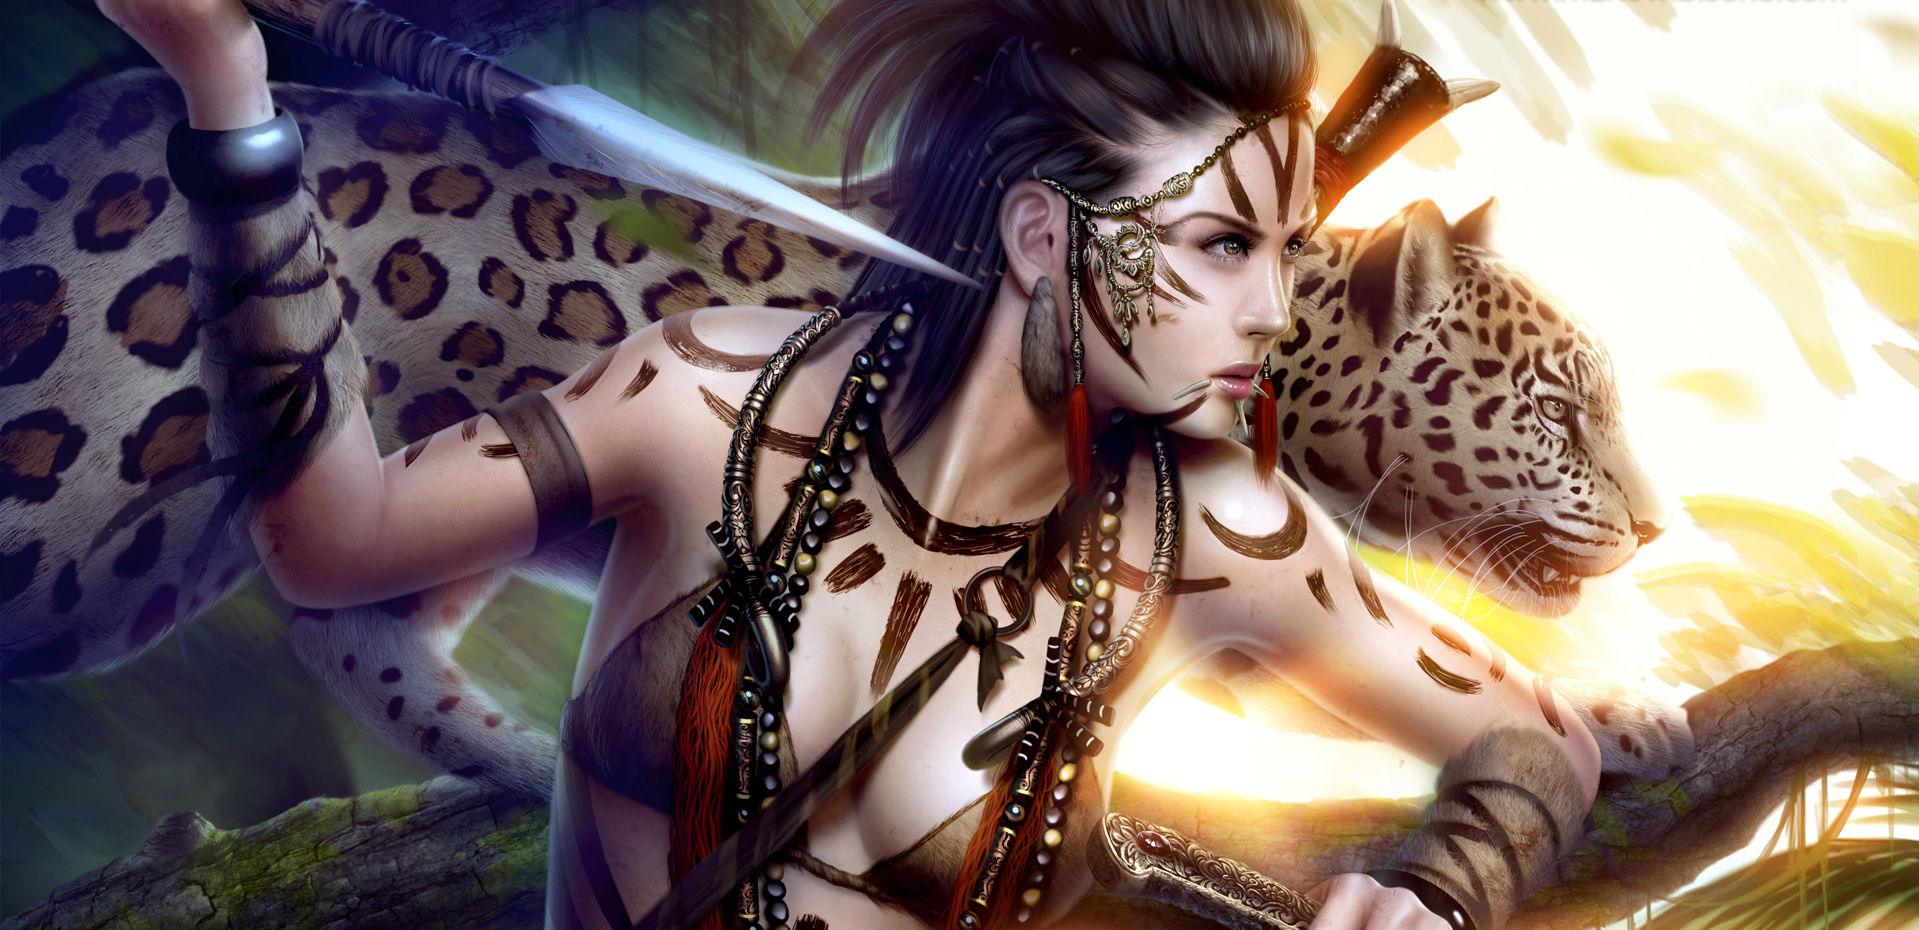 Fantasy Women Warrior Wallpaper and Background Imagex930